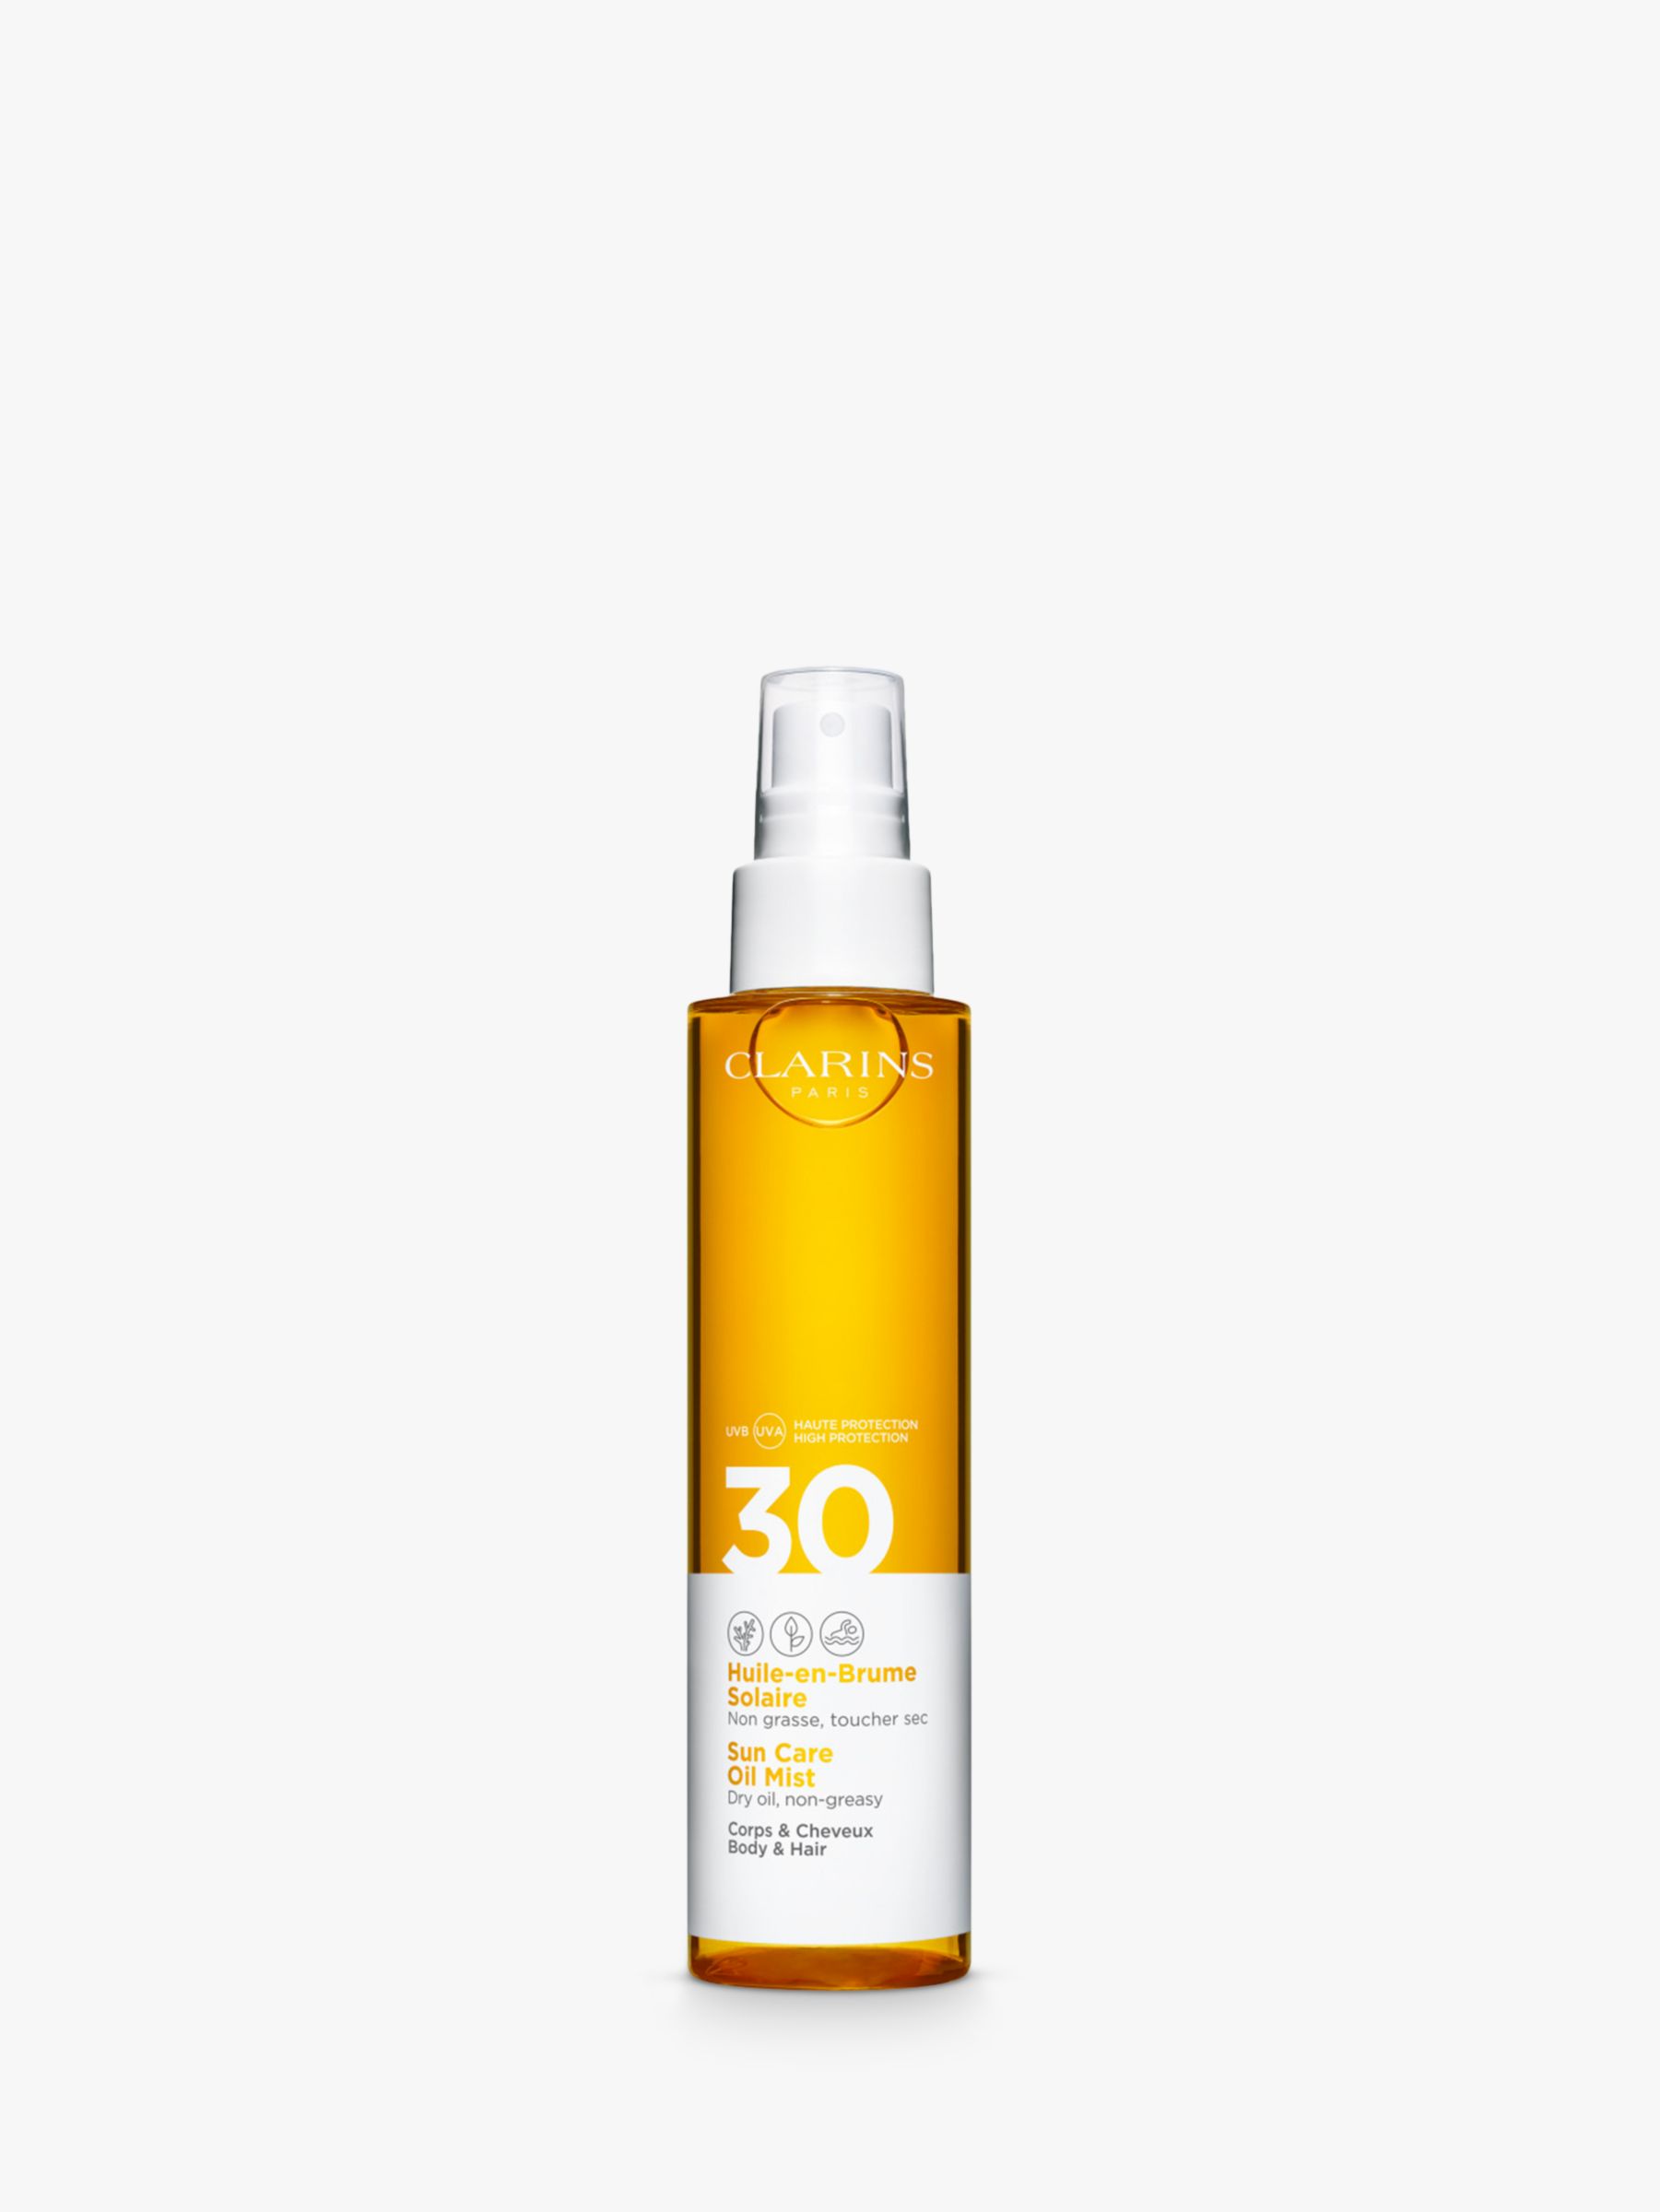 Clarins Sun Care Oil Mist for Body and Hair SPF 30, 150ml 1